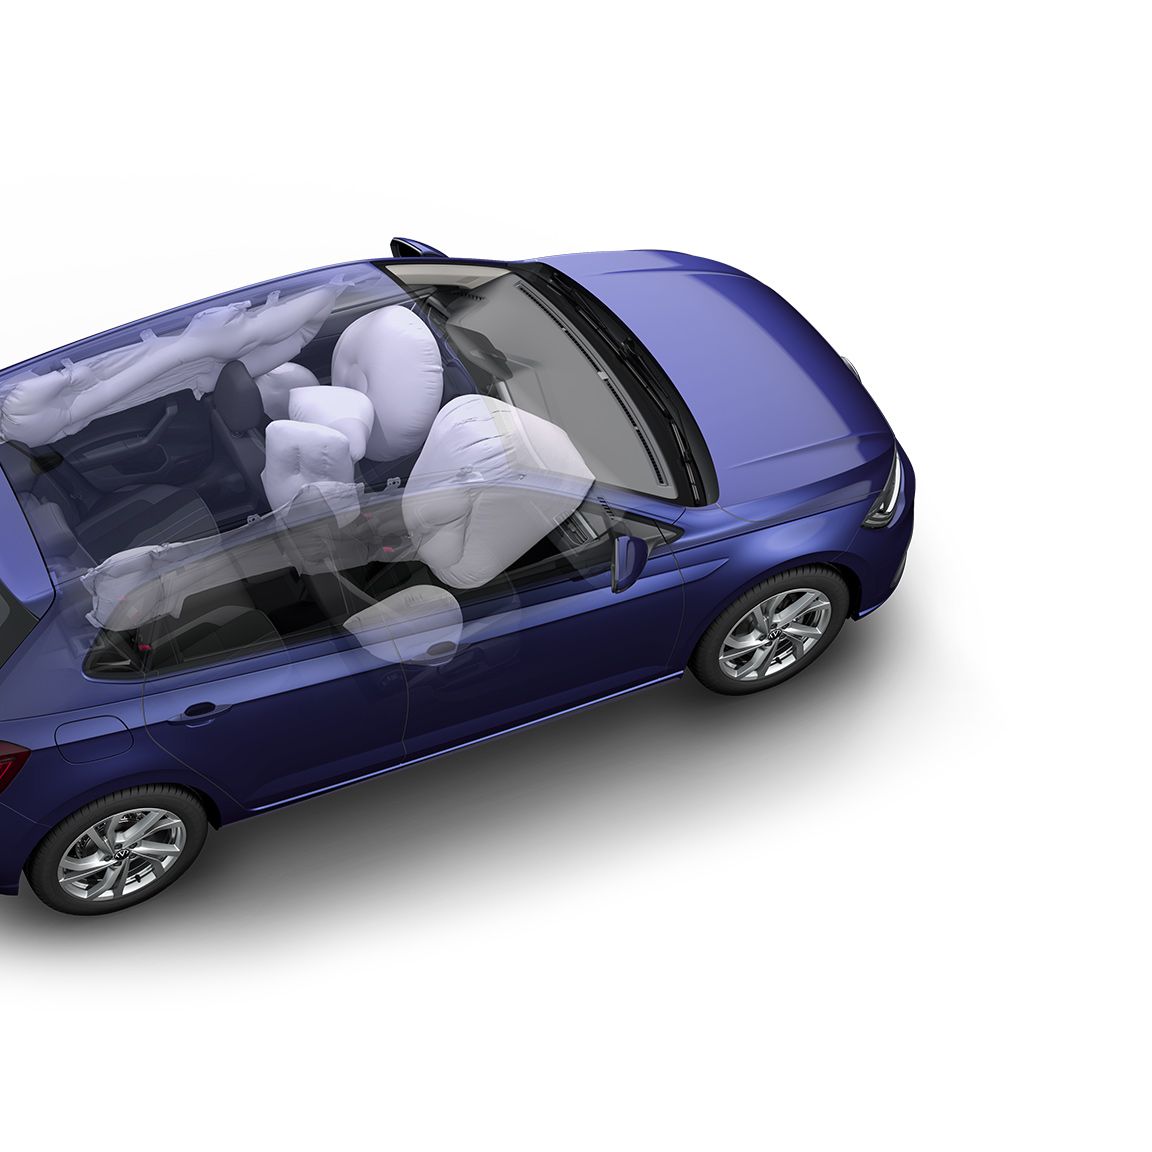 Abbildung zeigt Airbags im VW Polow